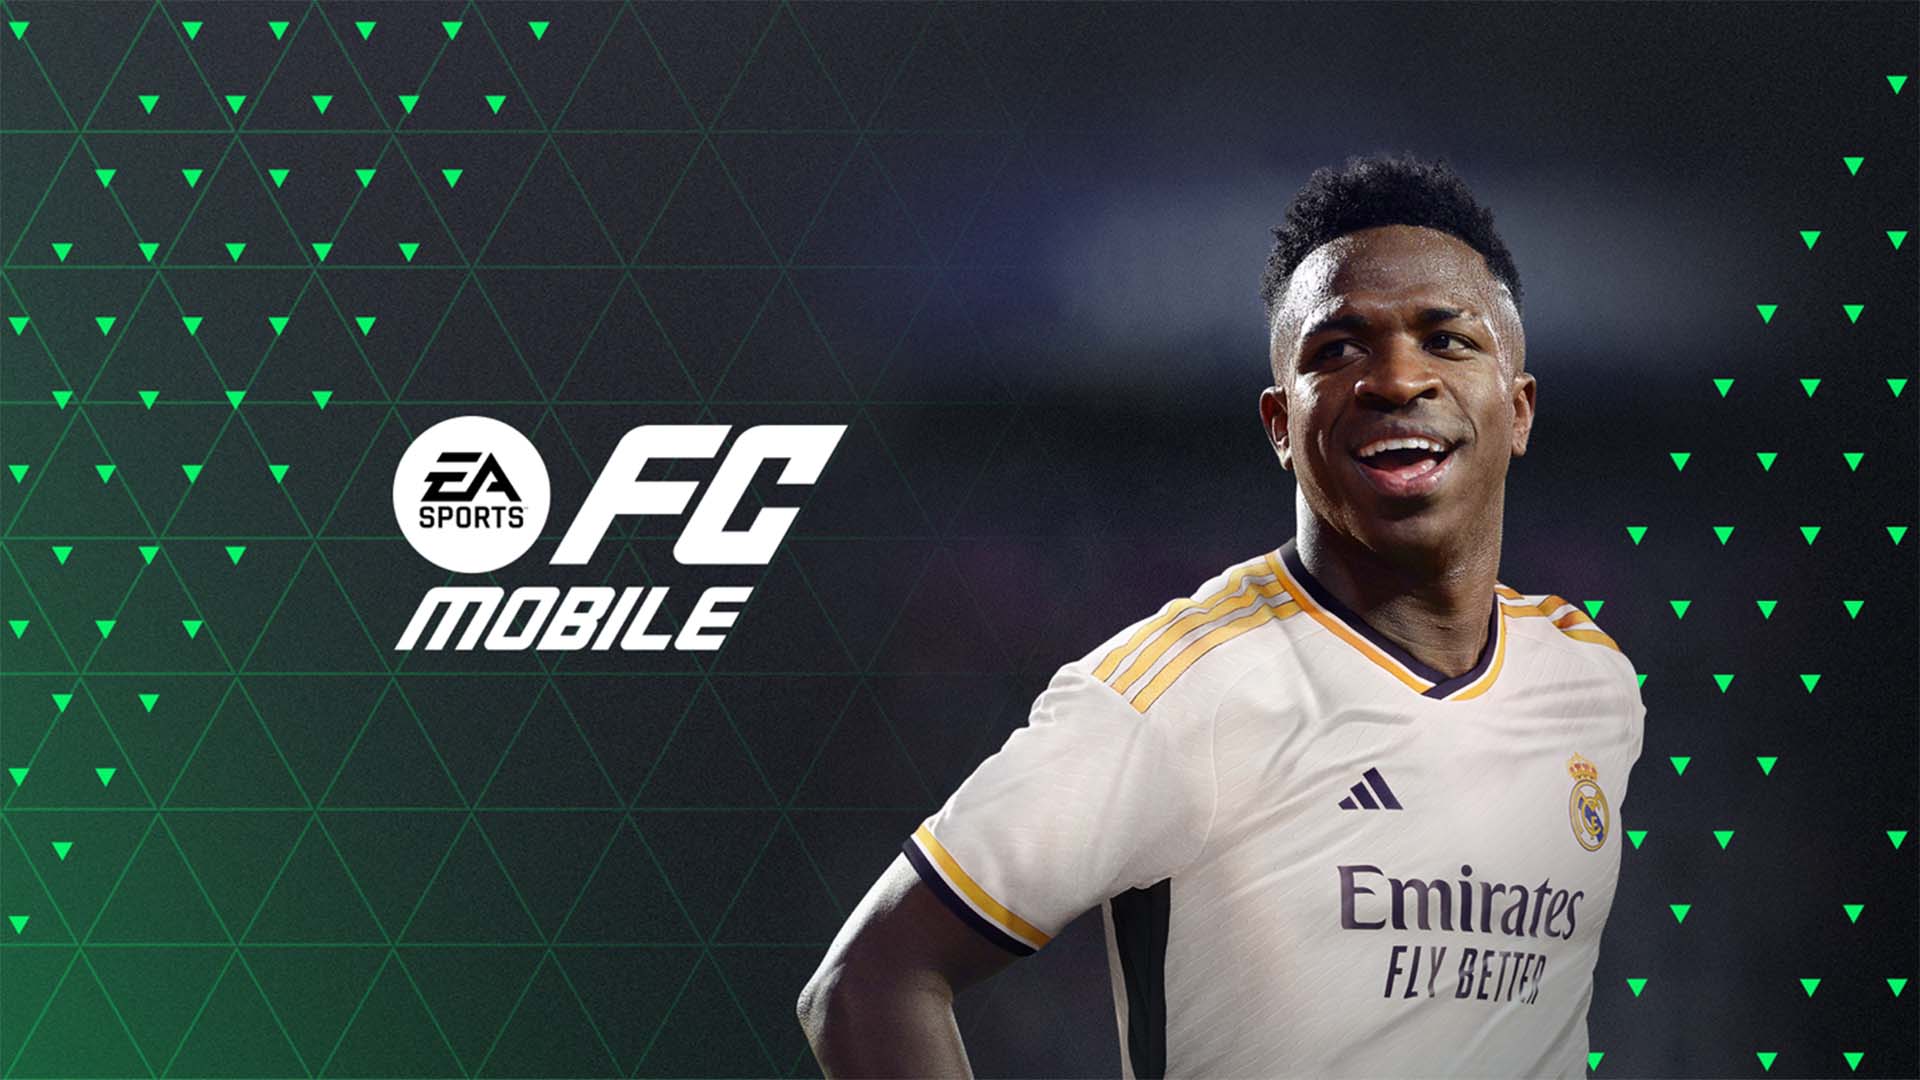 EA Sports FC Mobile announced